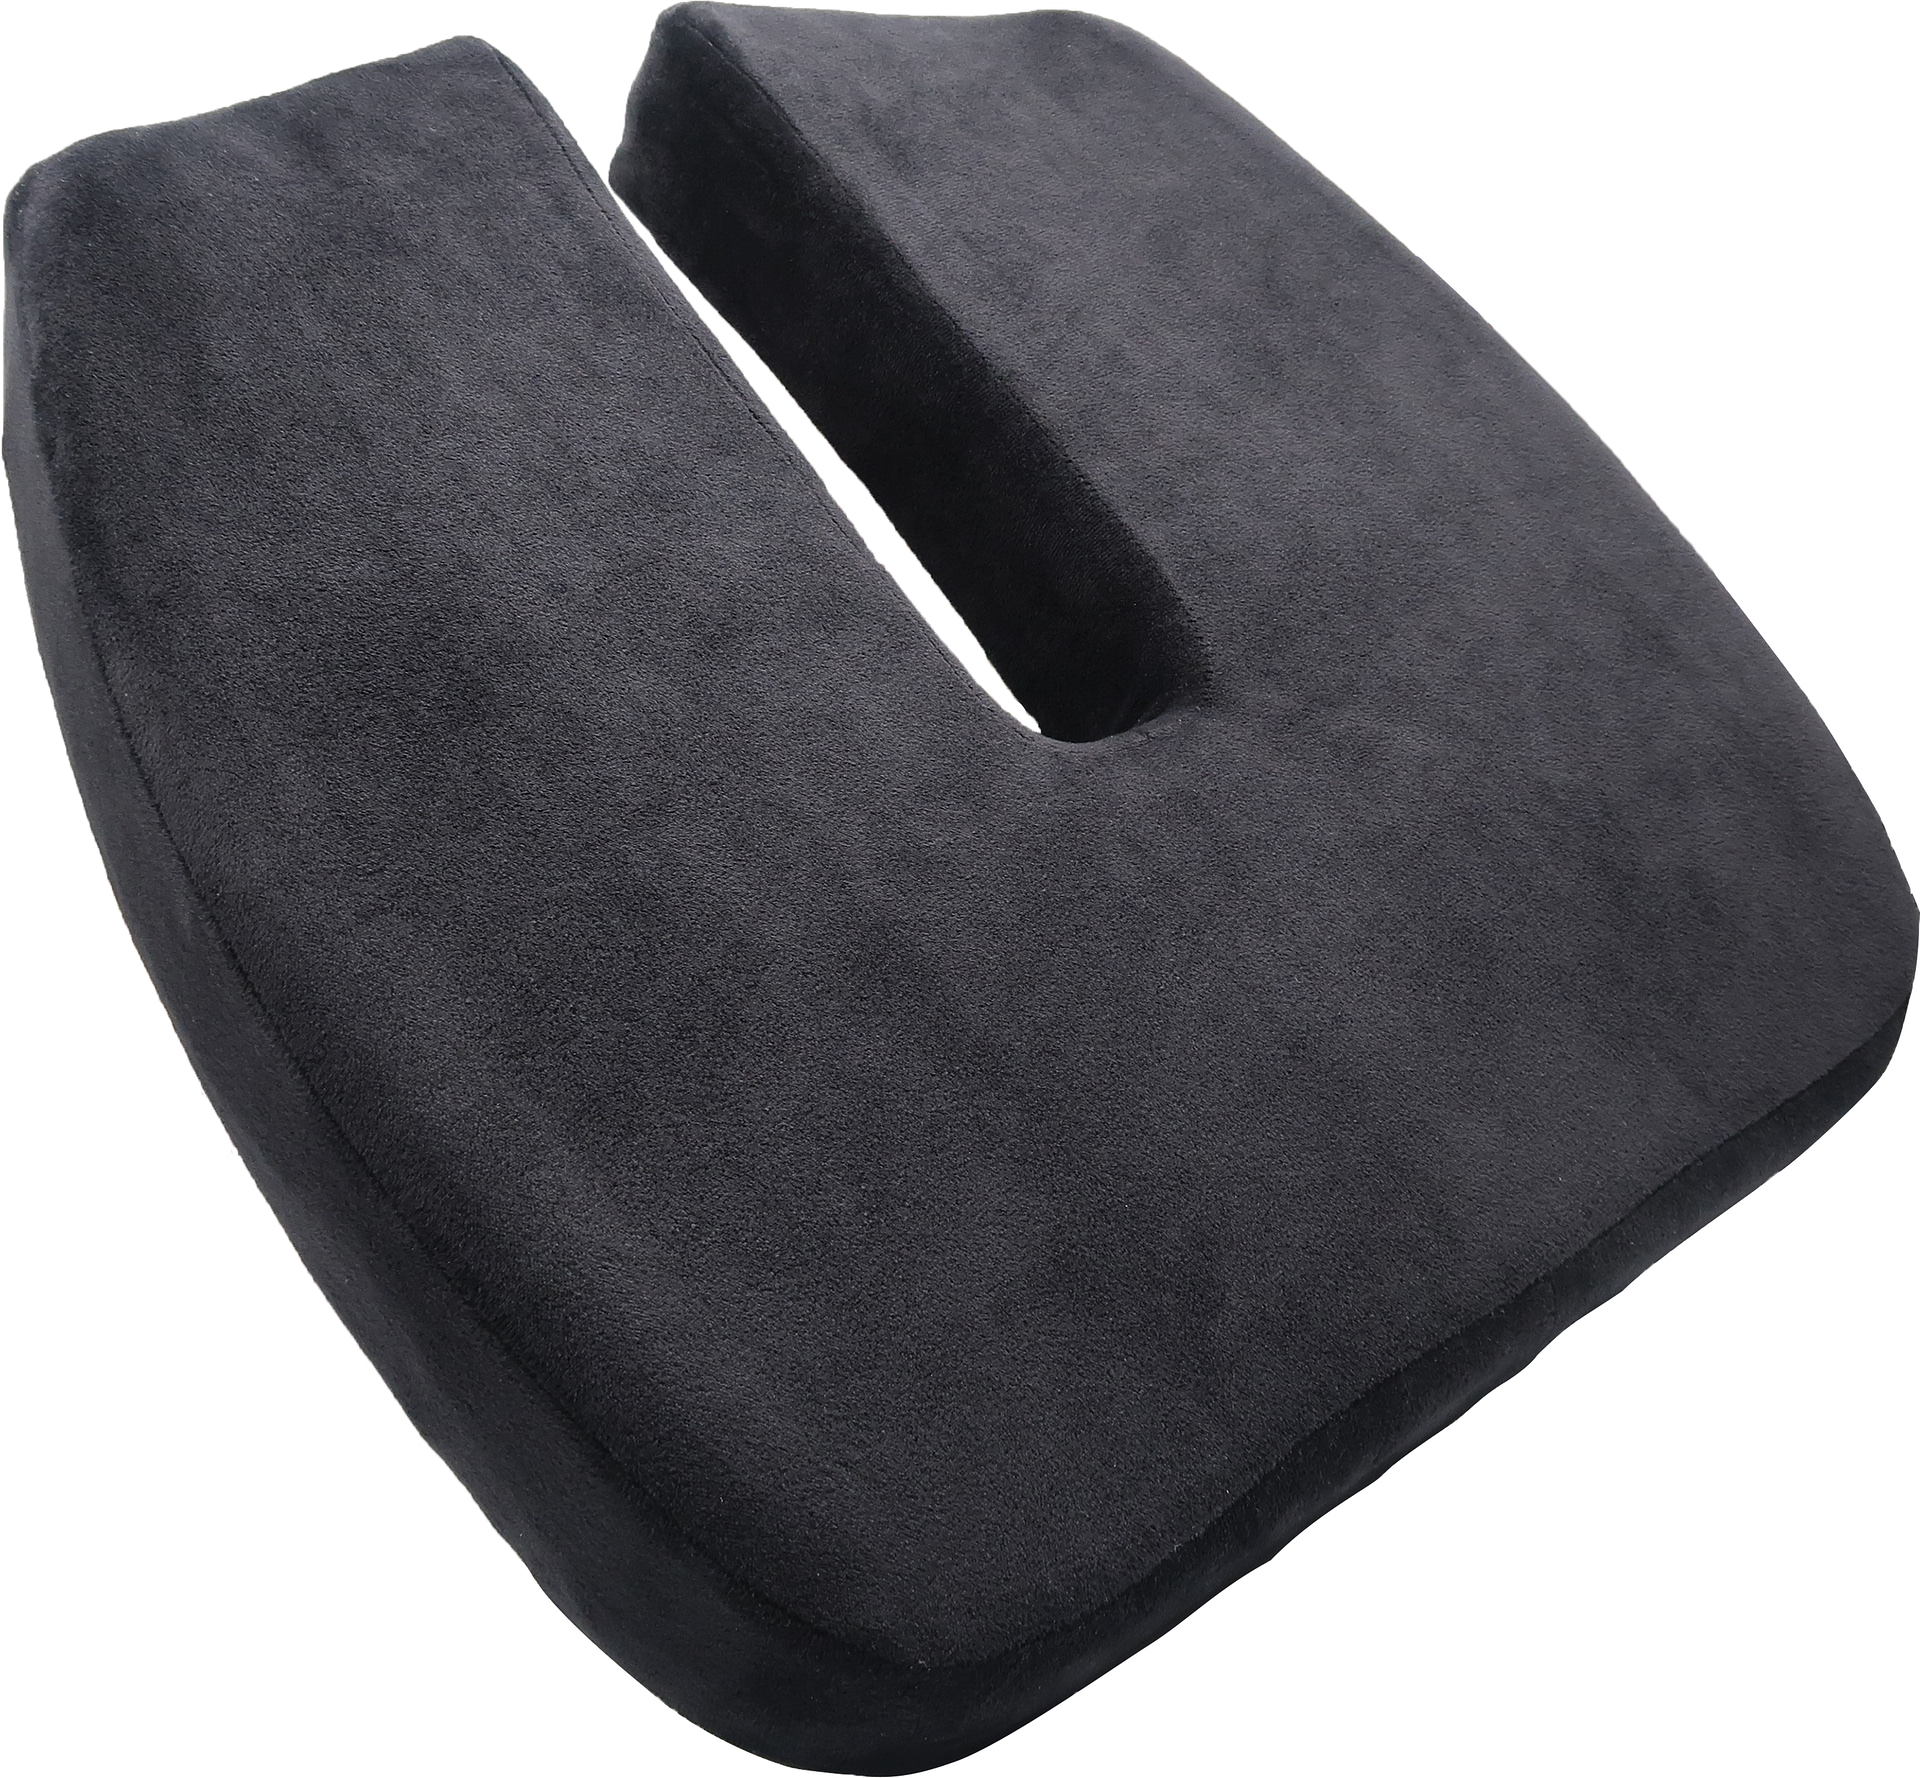 Premium HR Foam Coccyx Seat Cushion for Tailbone Pain Relief, Size